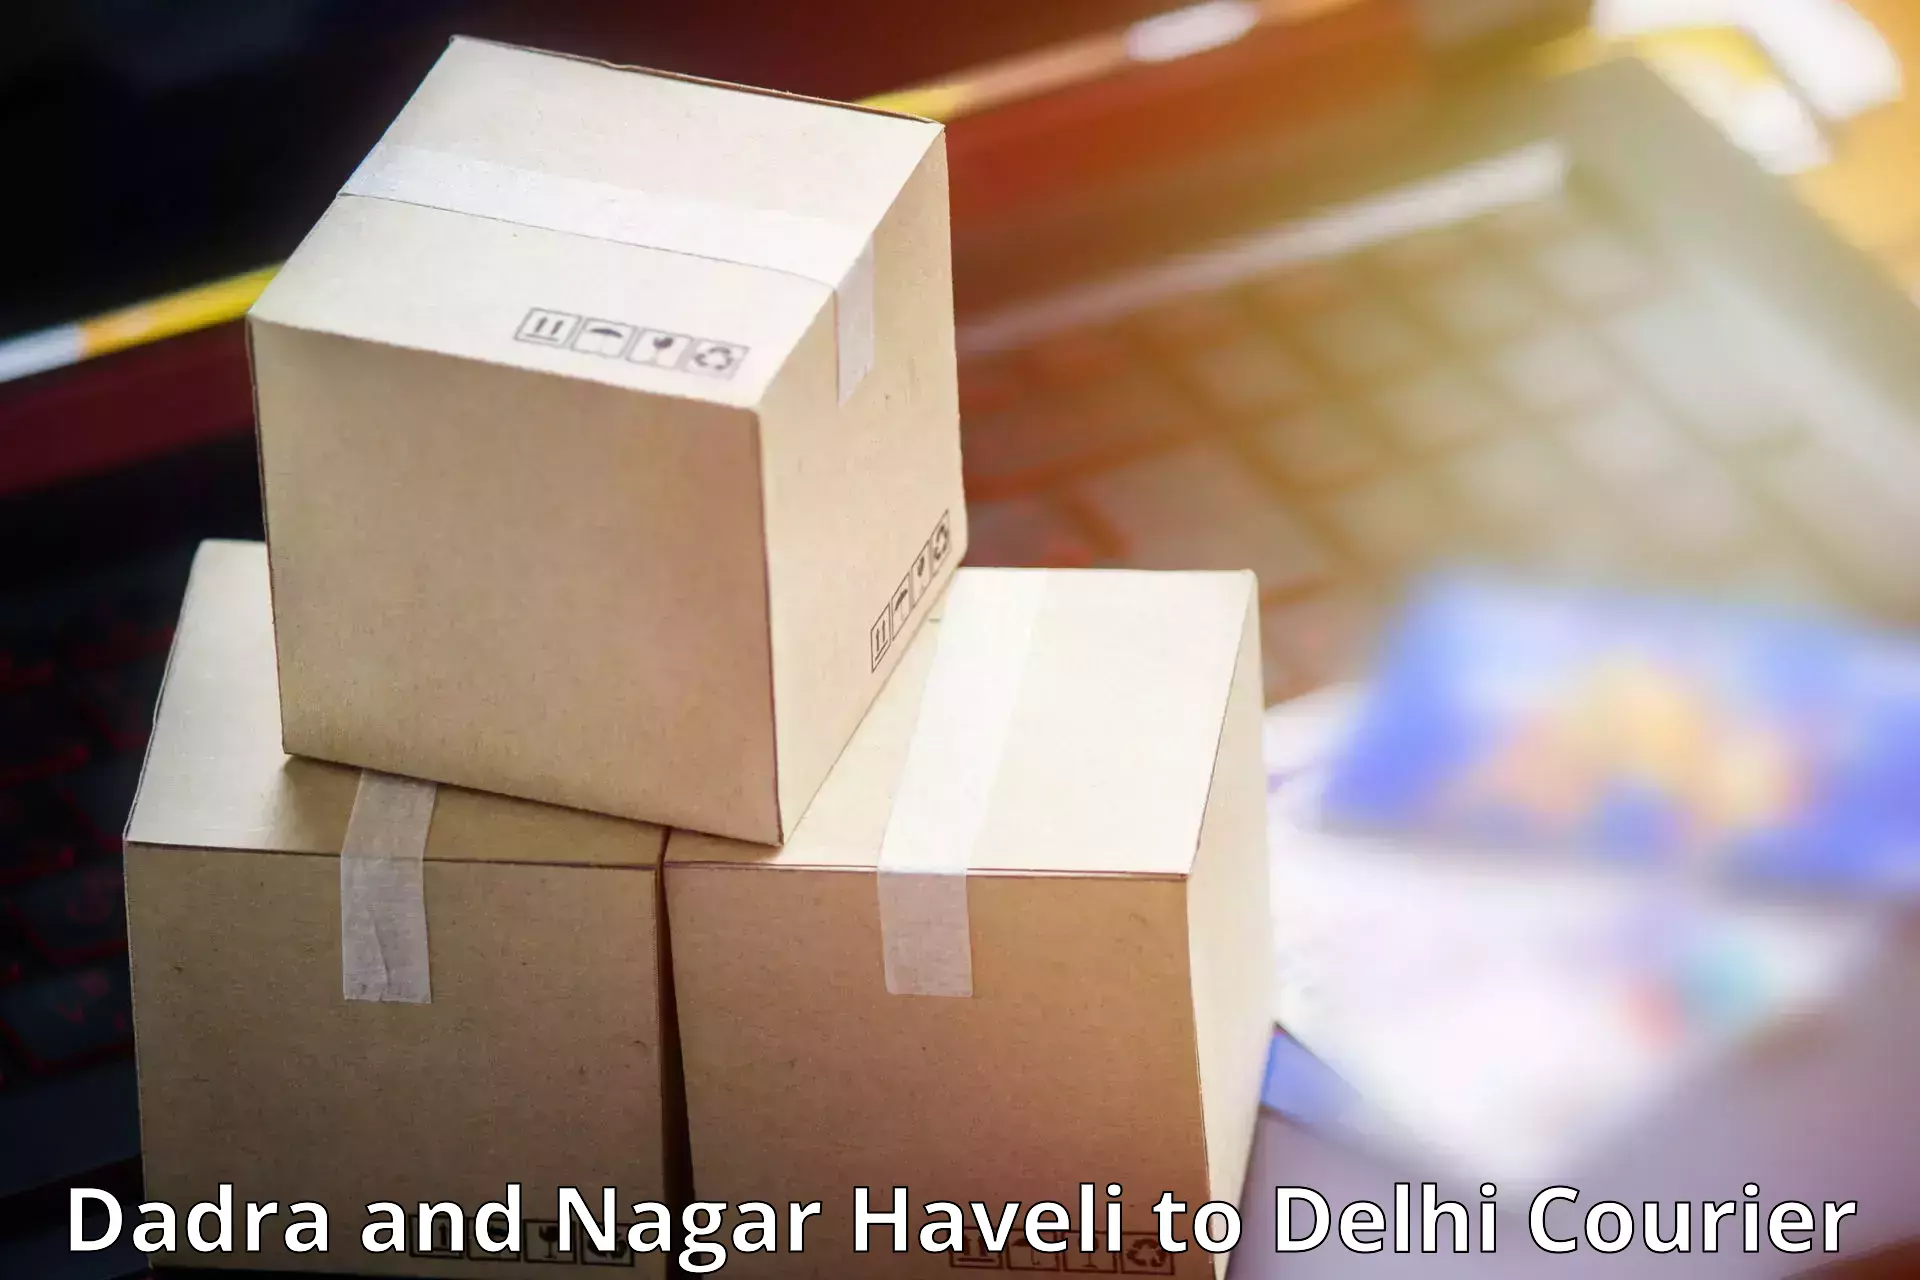 Efficient freight service Dadra and Nagar Haveli to Delhi